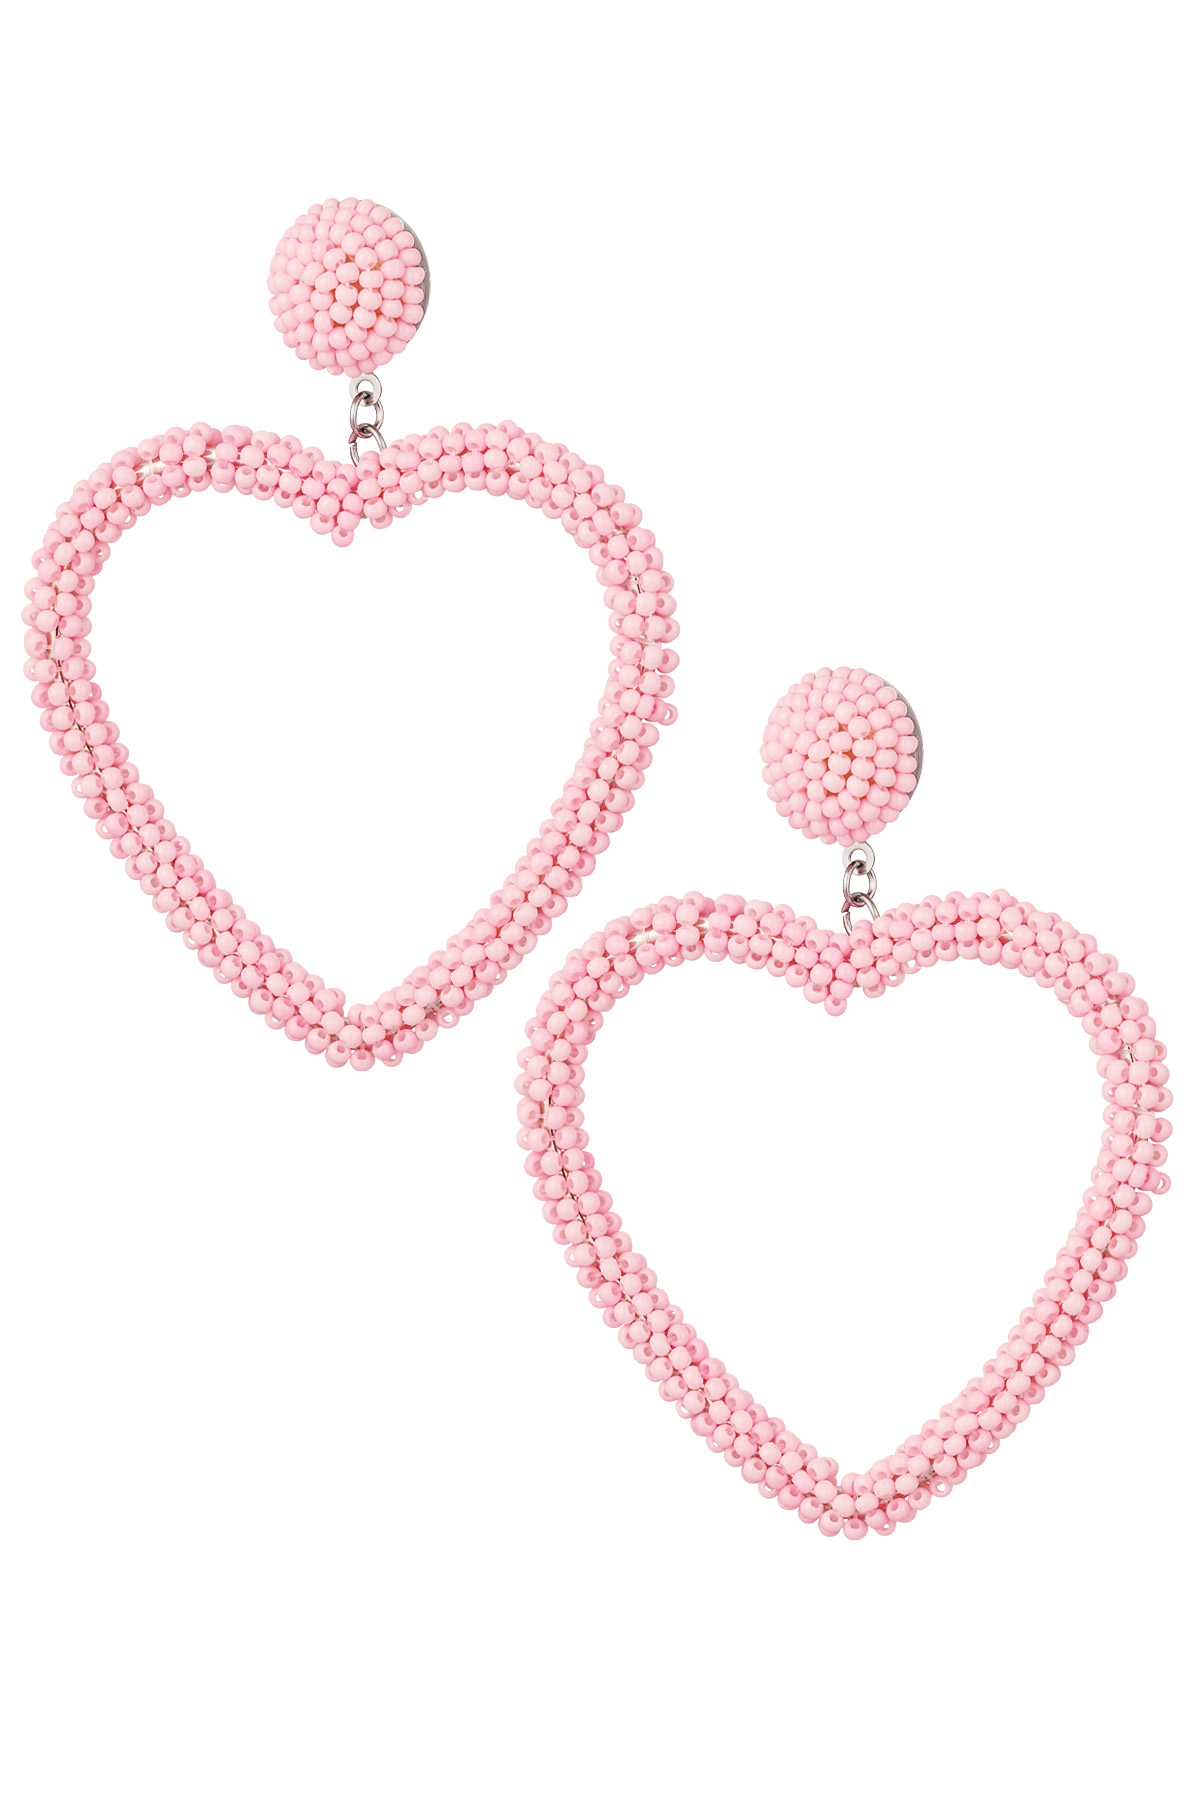 Ohrringe Perlen Candy - pastellrosa Edelstahl h5 